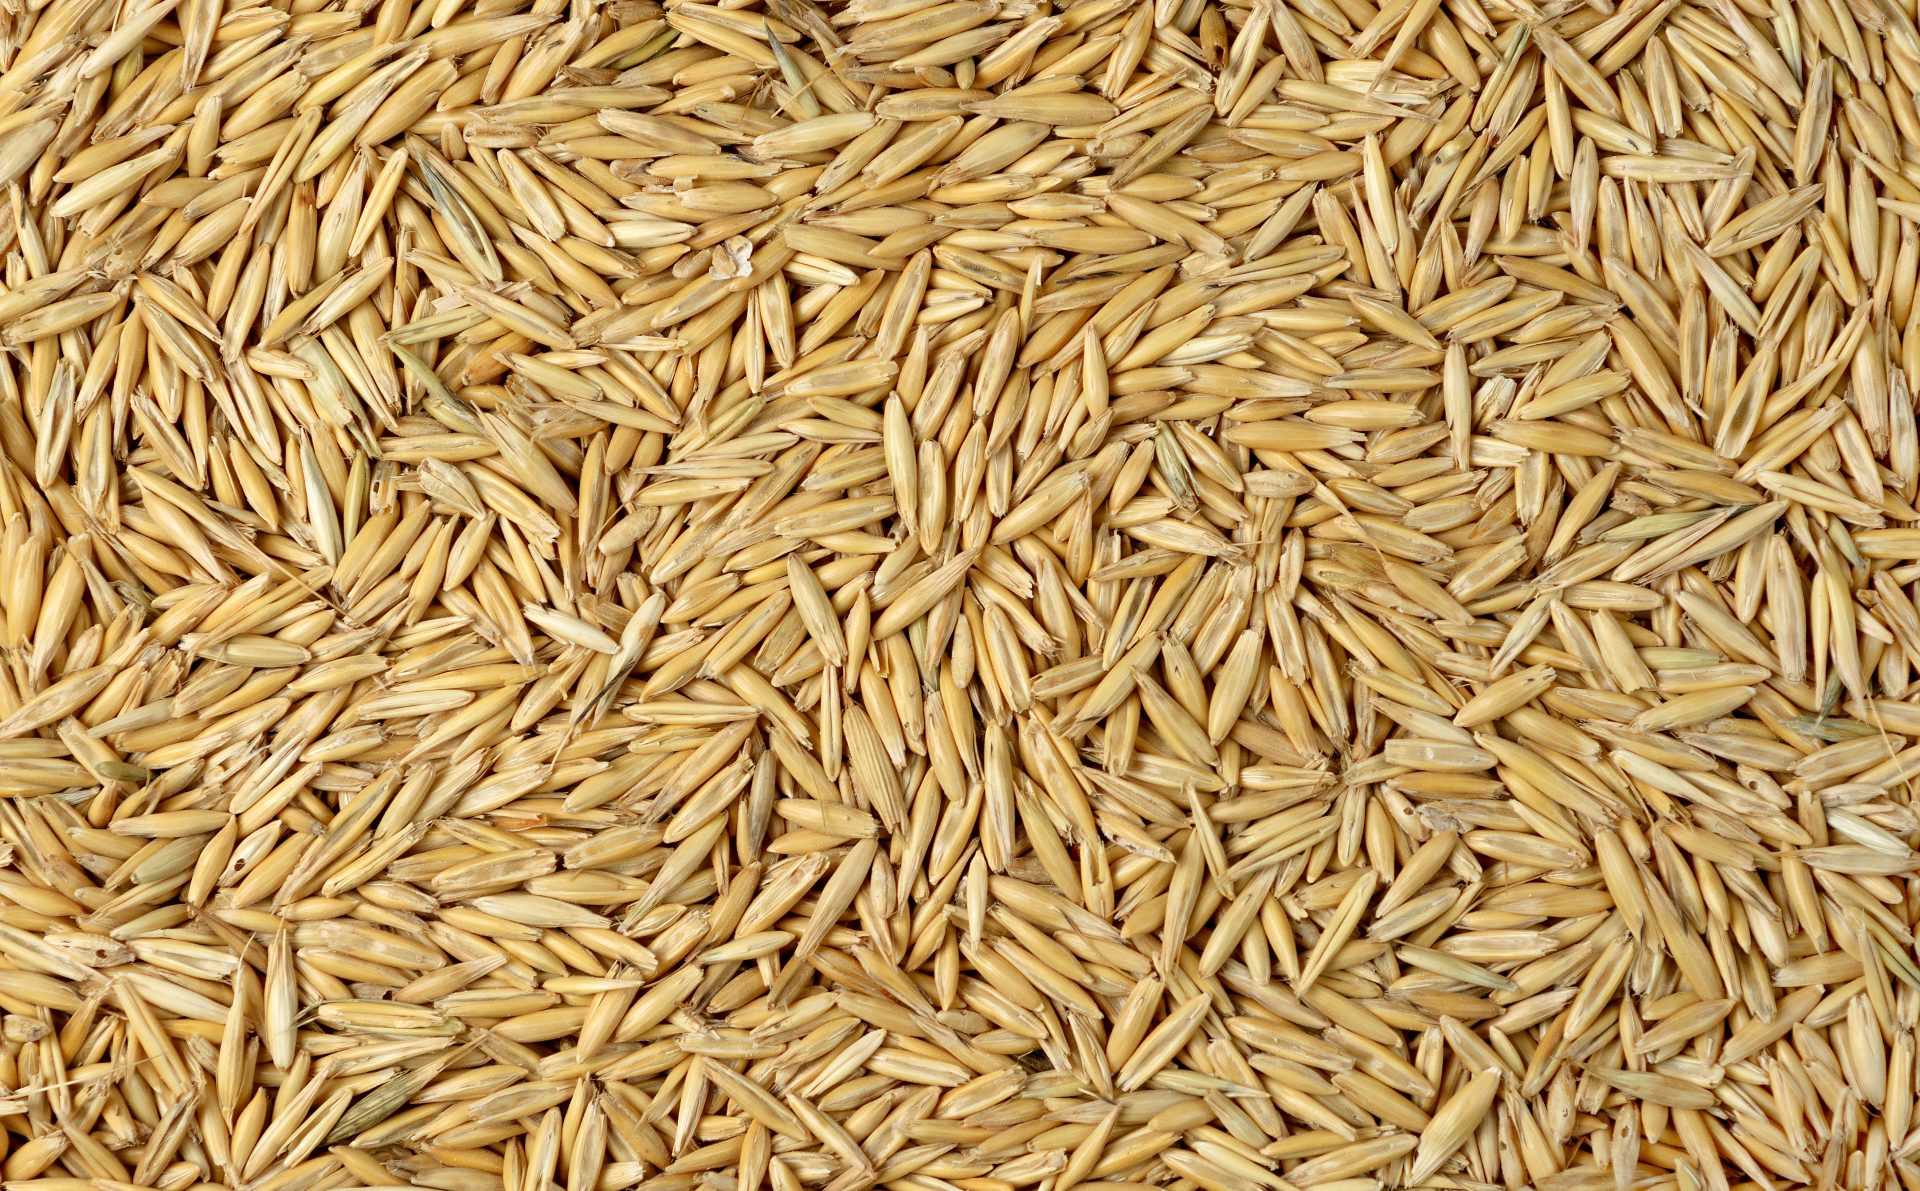 Close up of oat grains